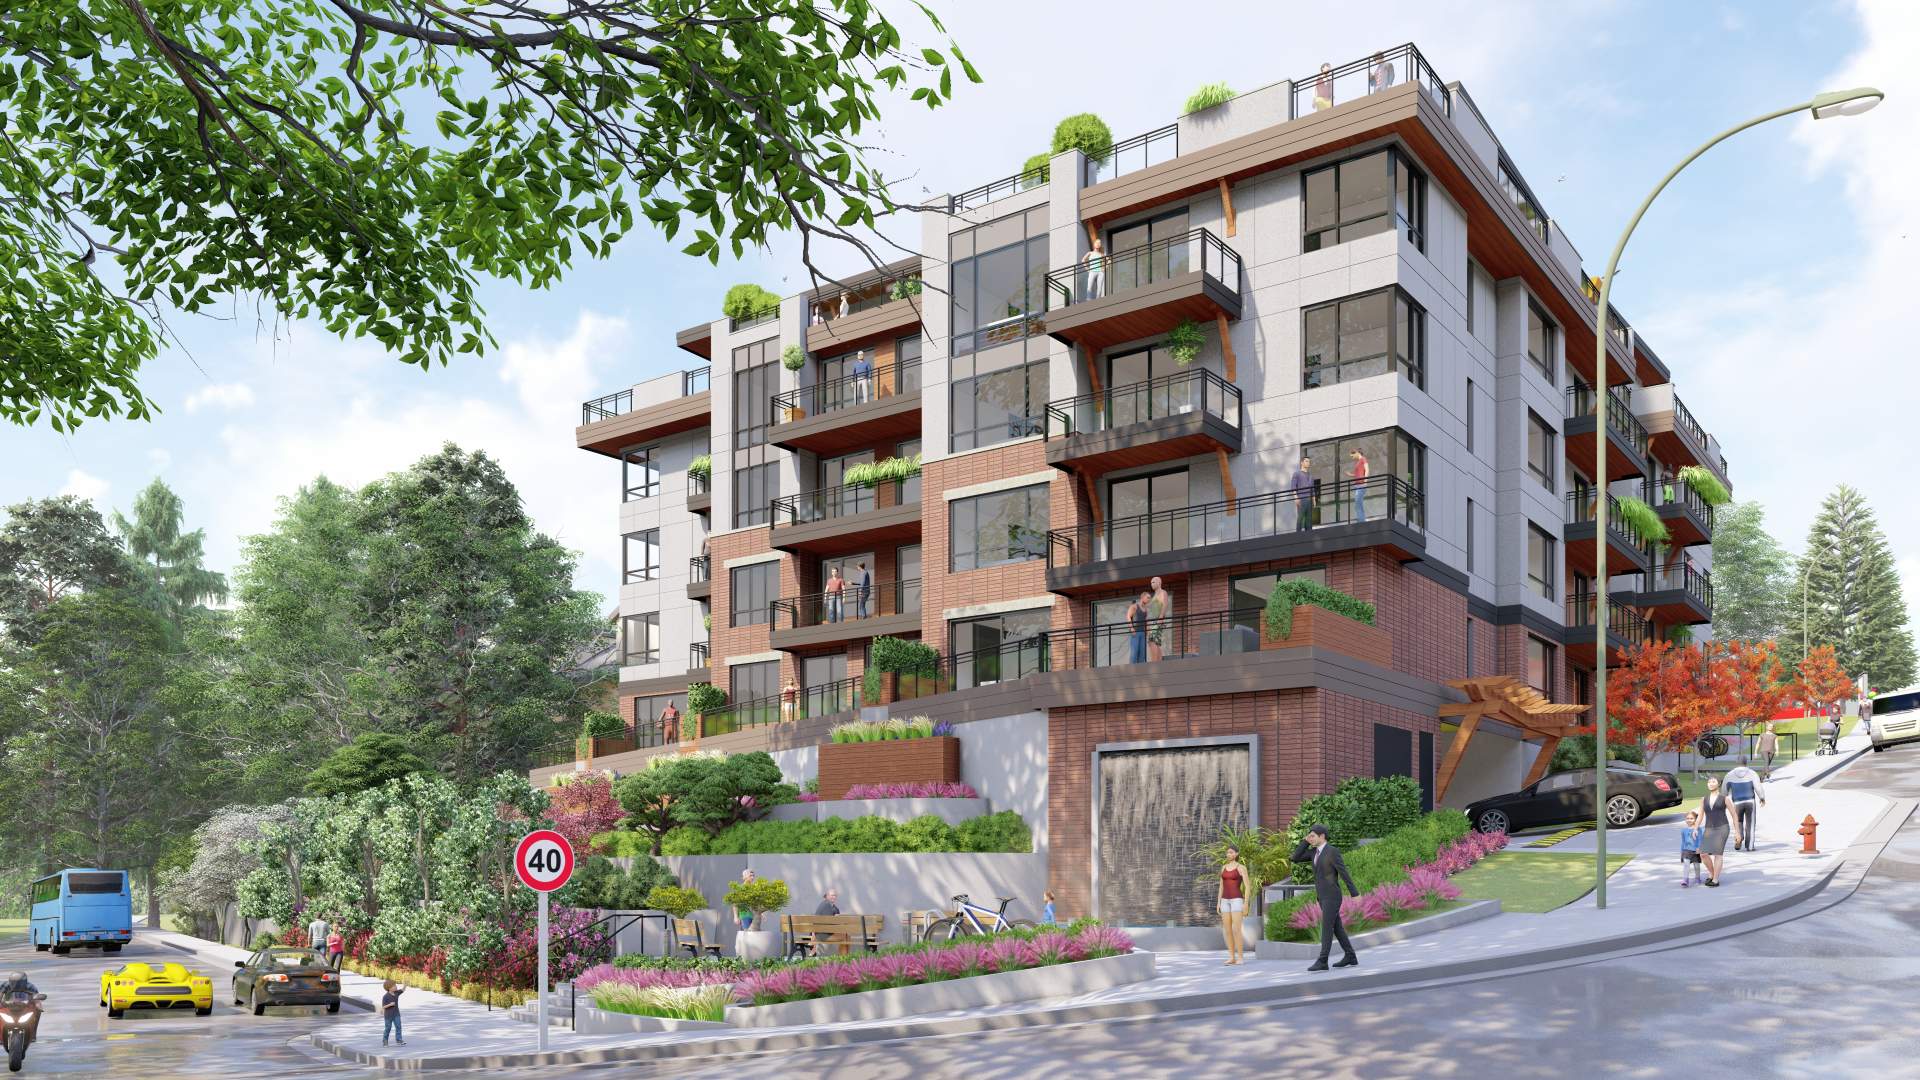 Sunnyville Maple Ridge is a 5-storey condo project by Cascadia Green Development.